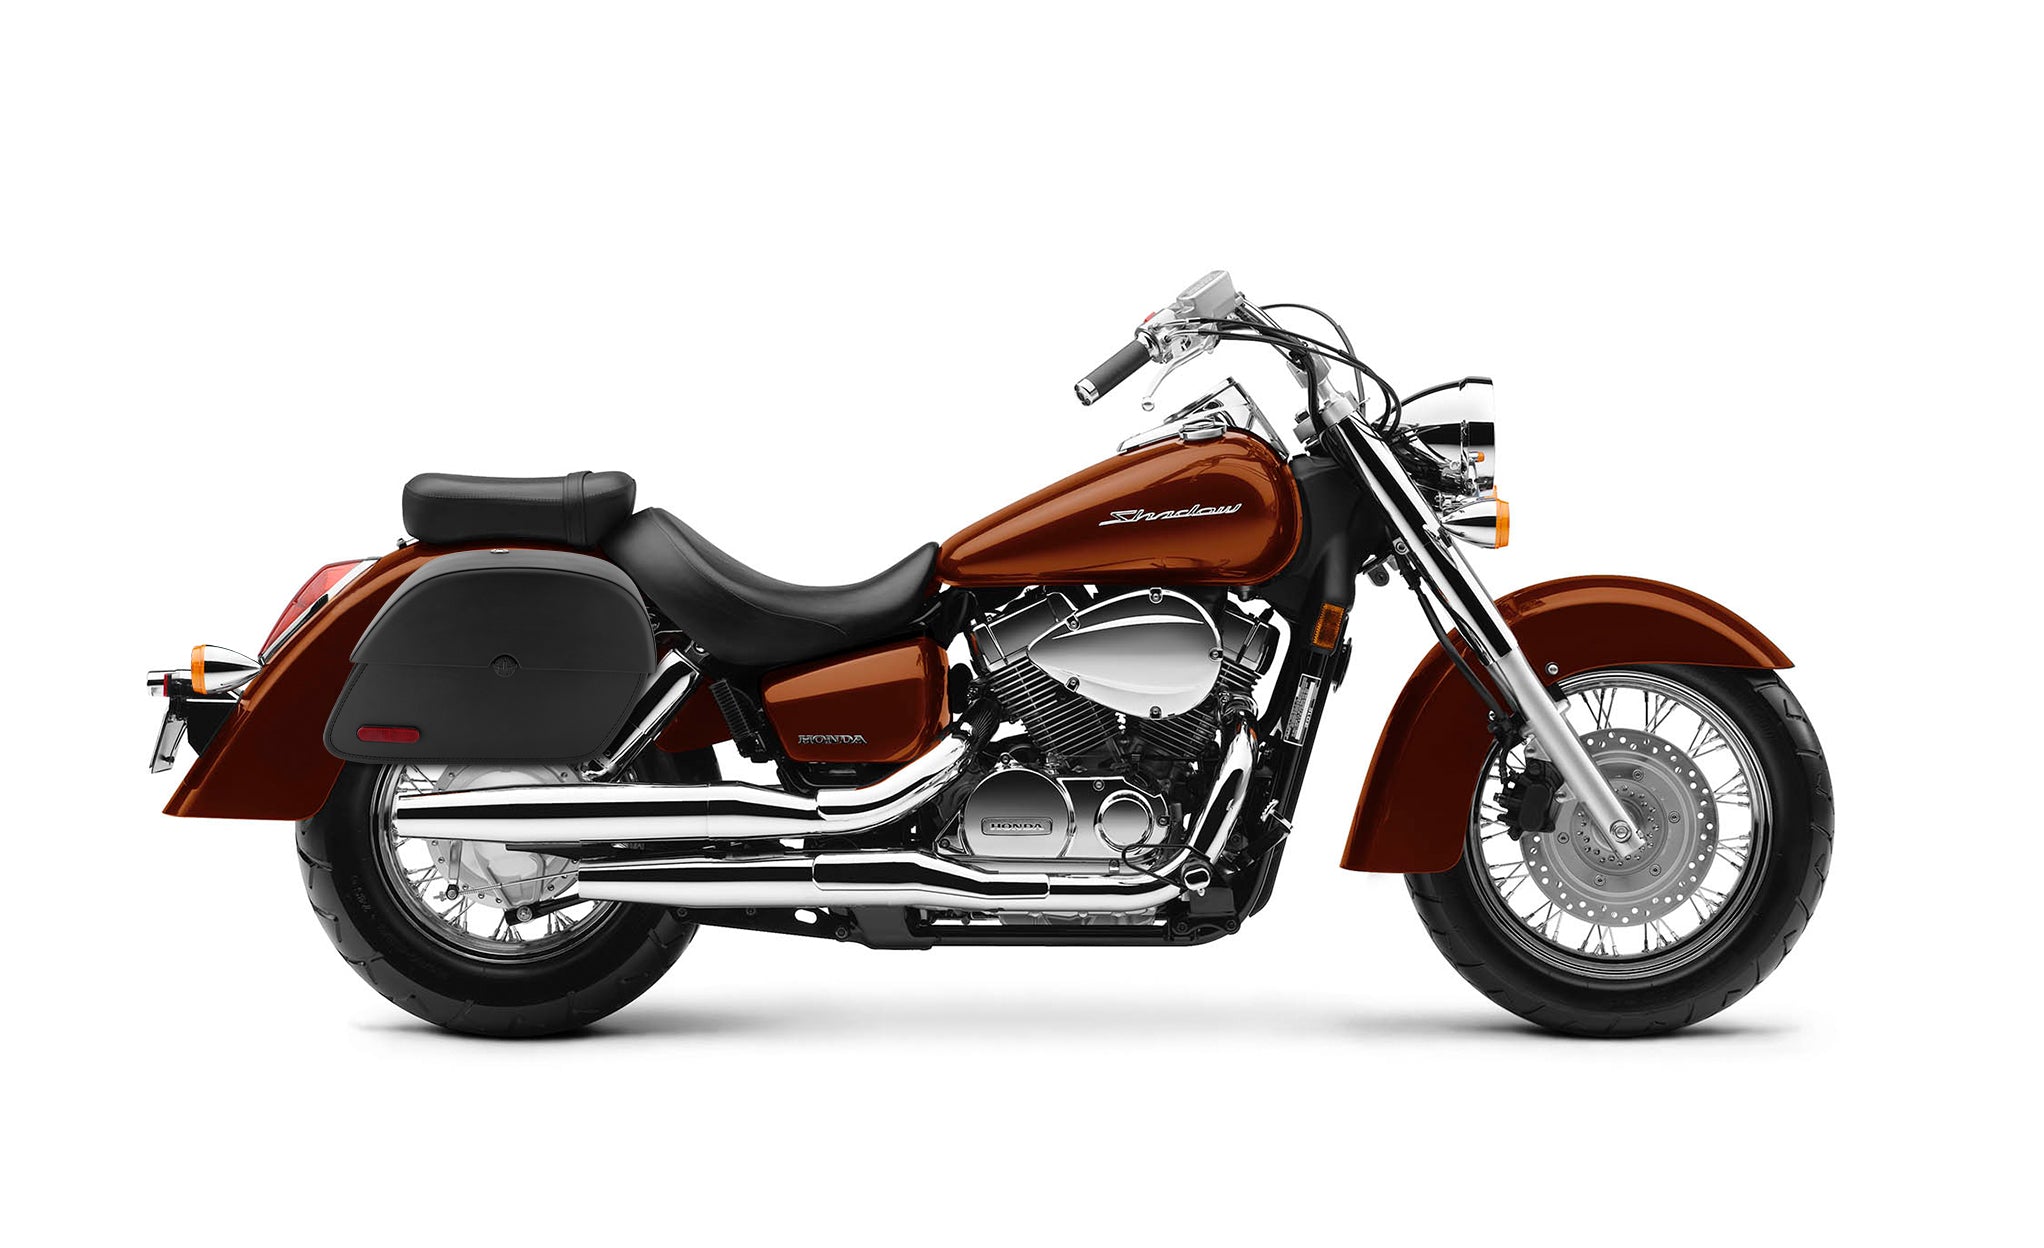 Viking Panzer Medium Honda Shadow 1100 Aero Leather Motorcycle Saddlebags Engineering Excellence with Bag on Bike @expand